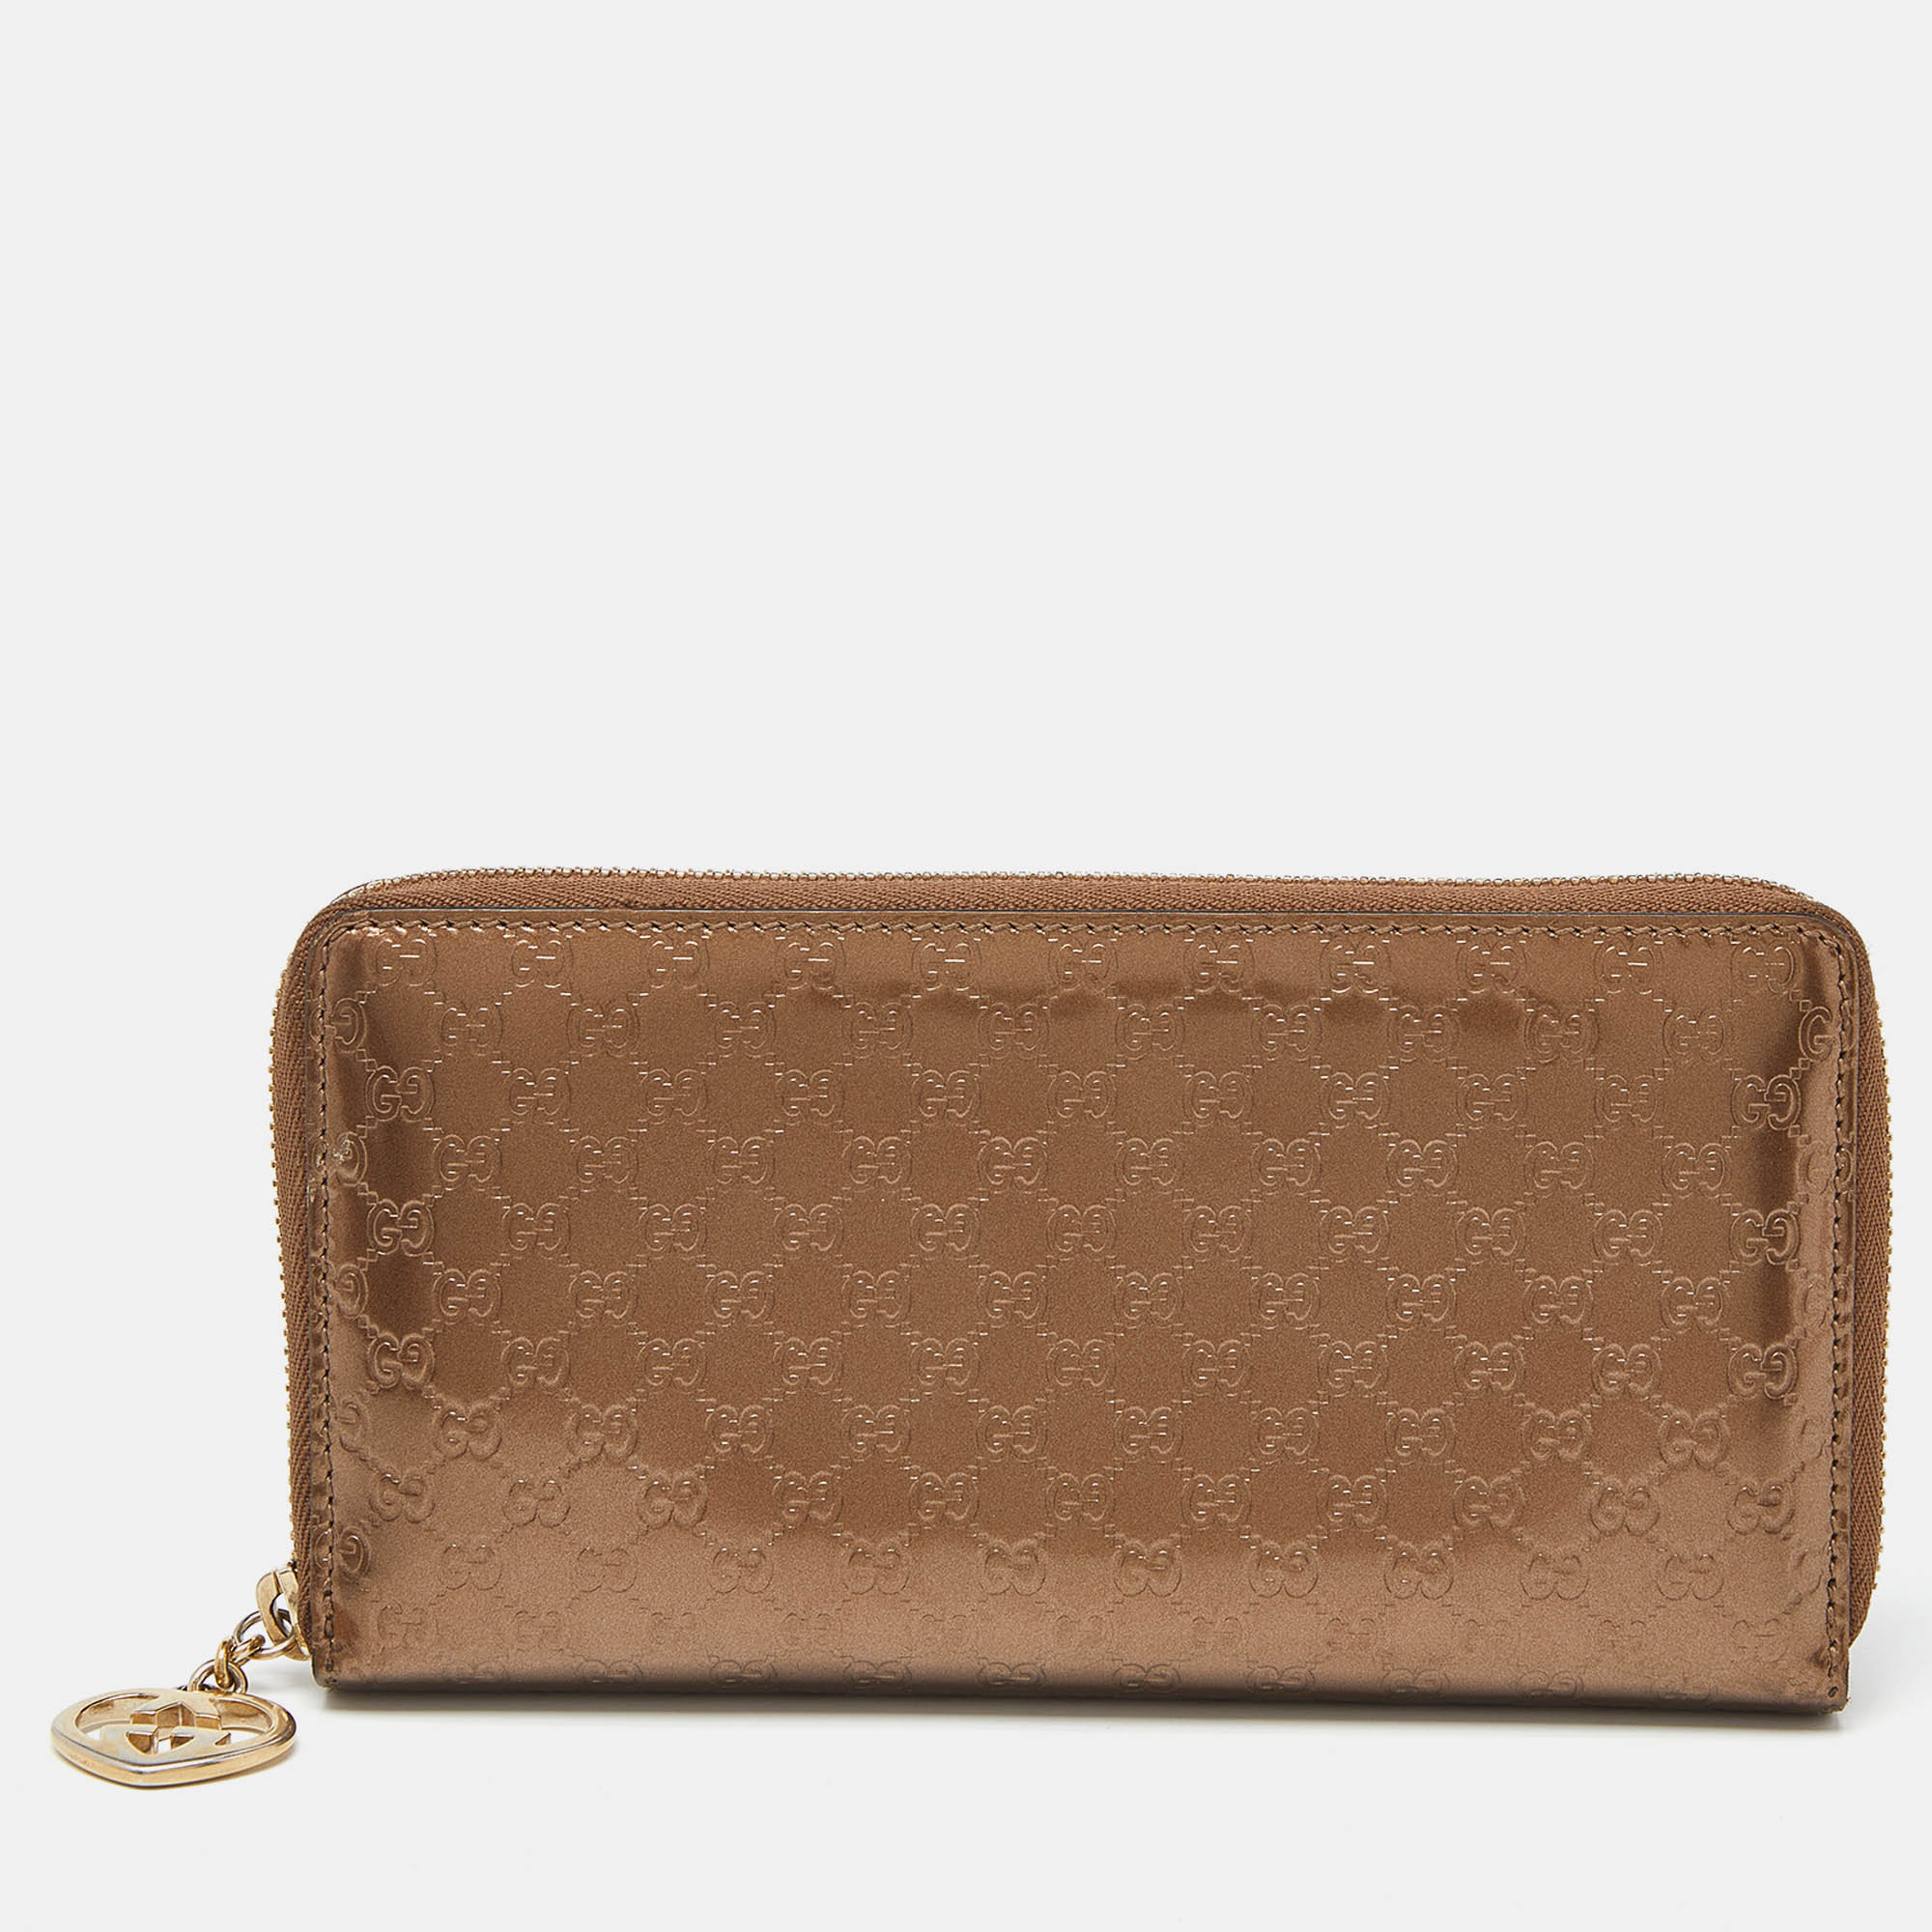 Gucci bronze guccissima patent leather zip around wallet